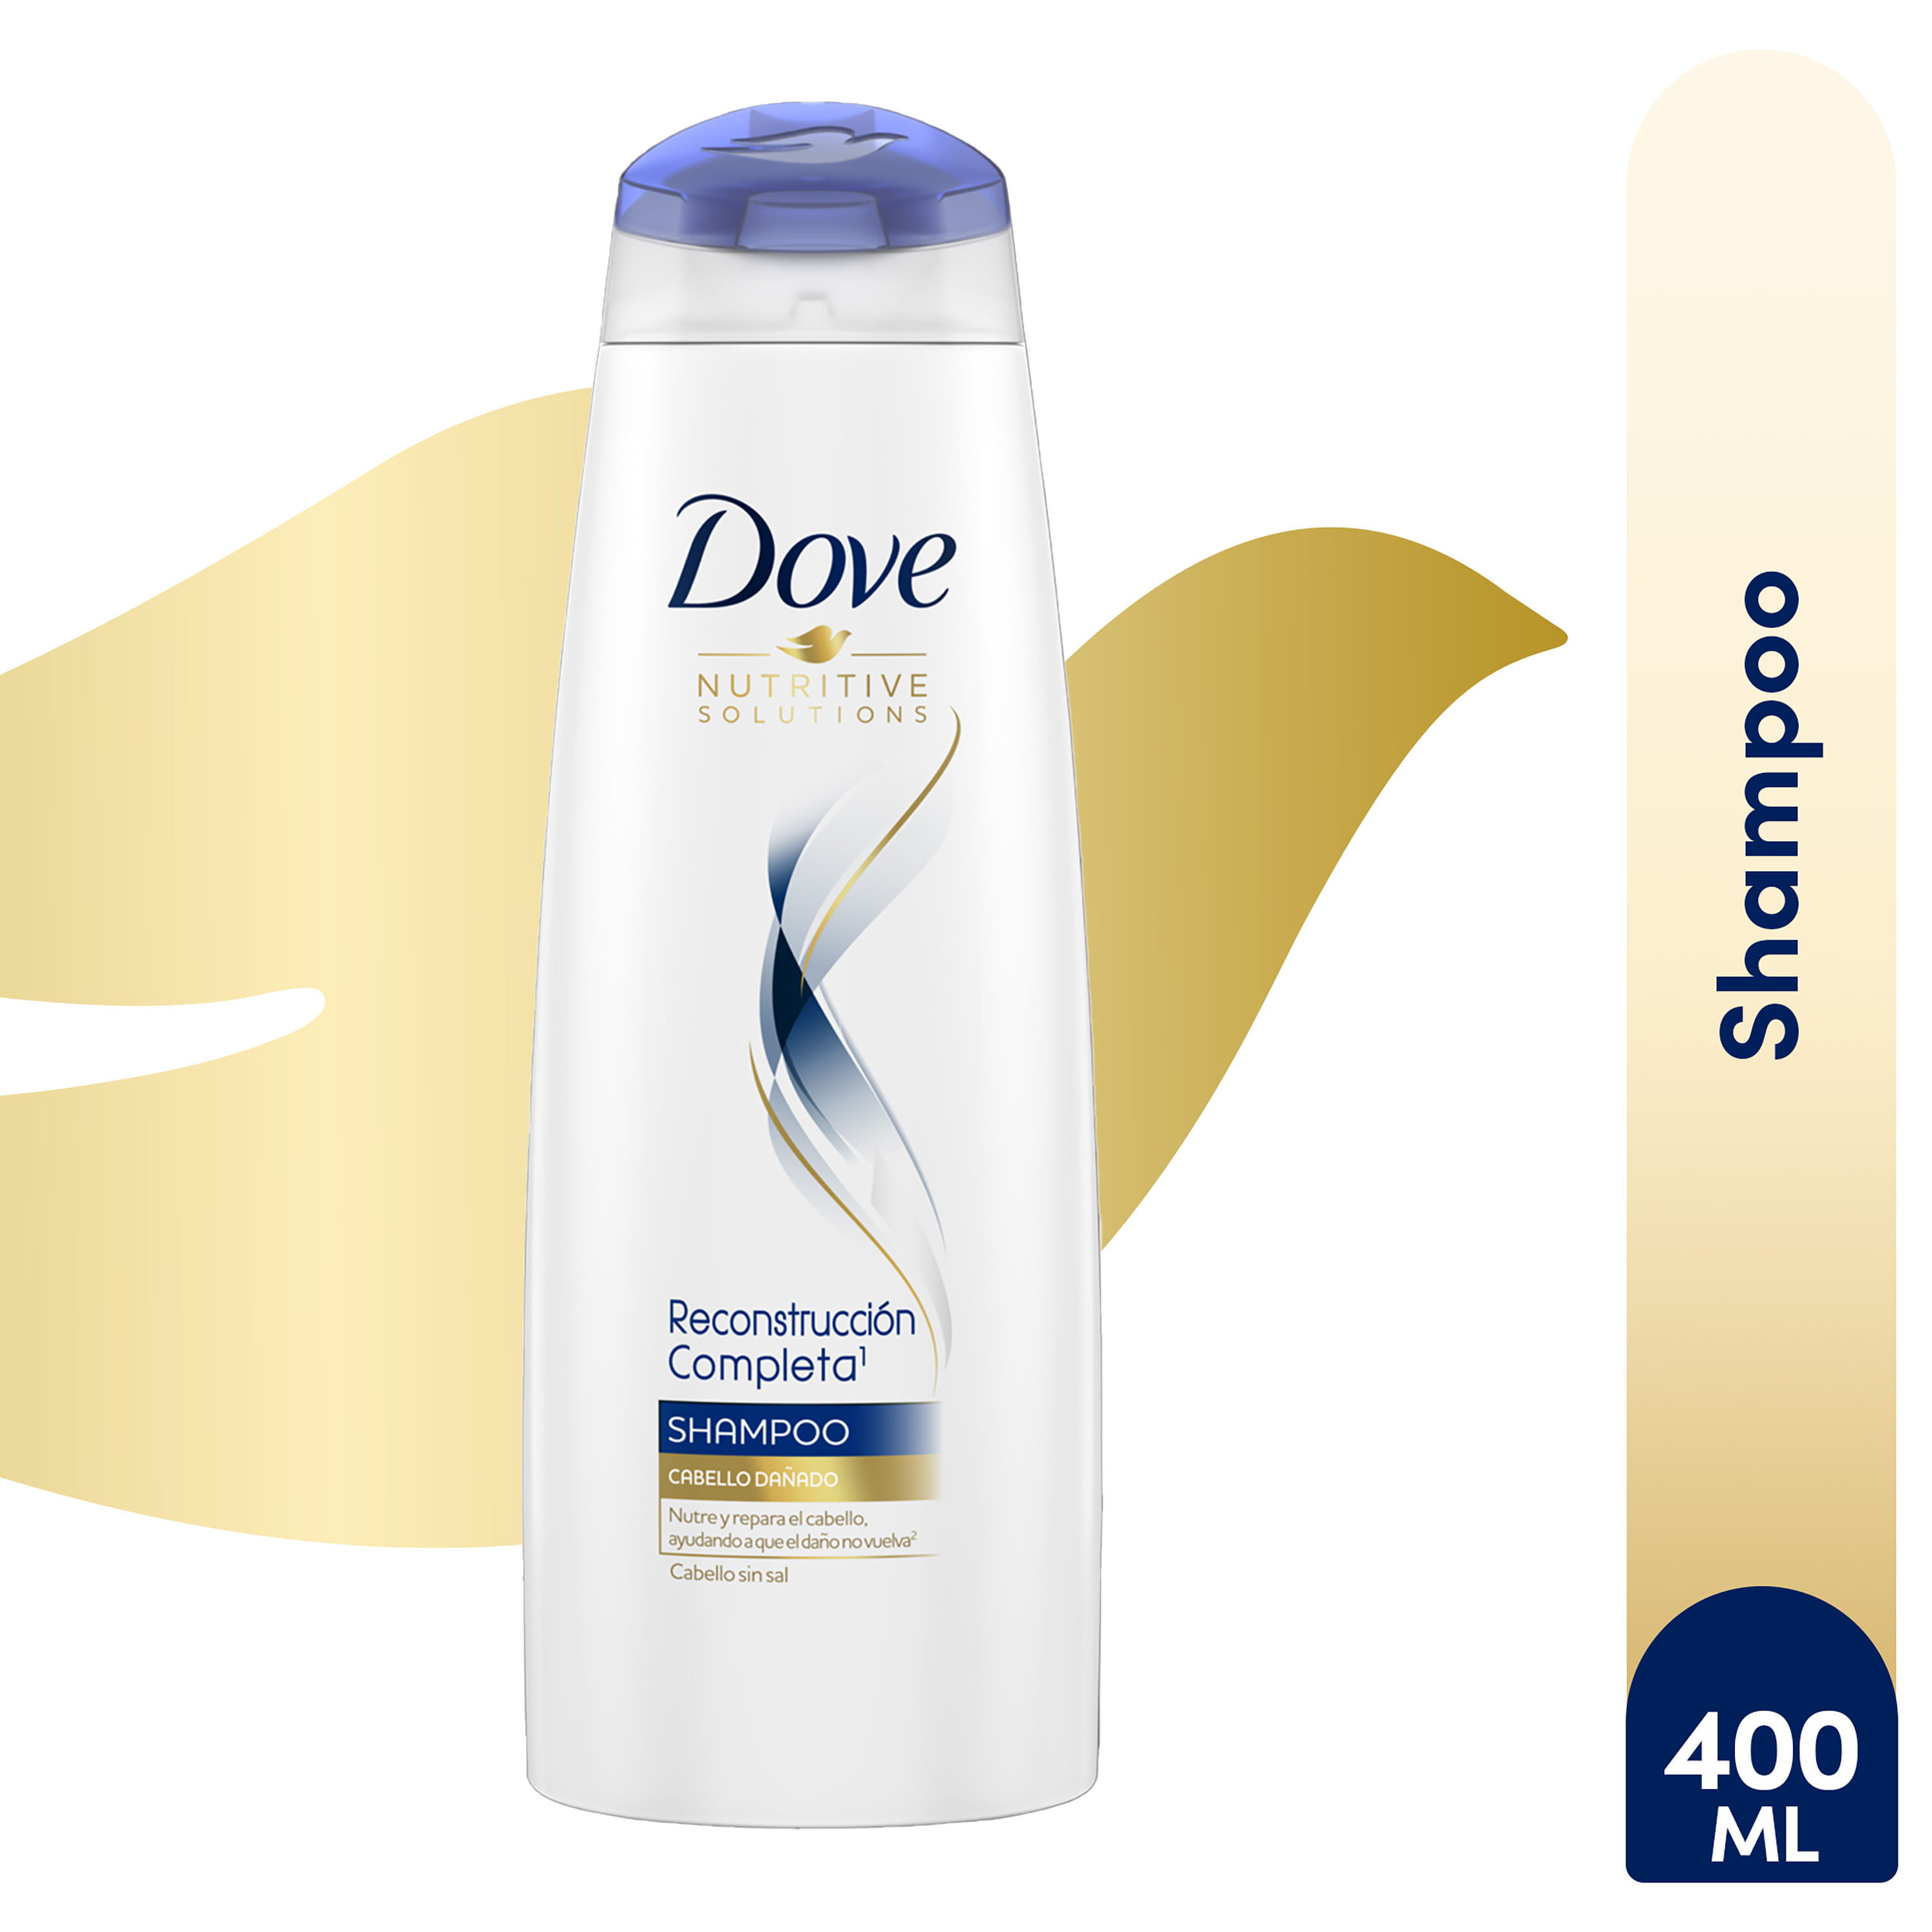 Shampoo-Dove-Reconstrucci-n-Completa-400ml-1-24510